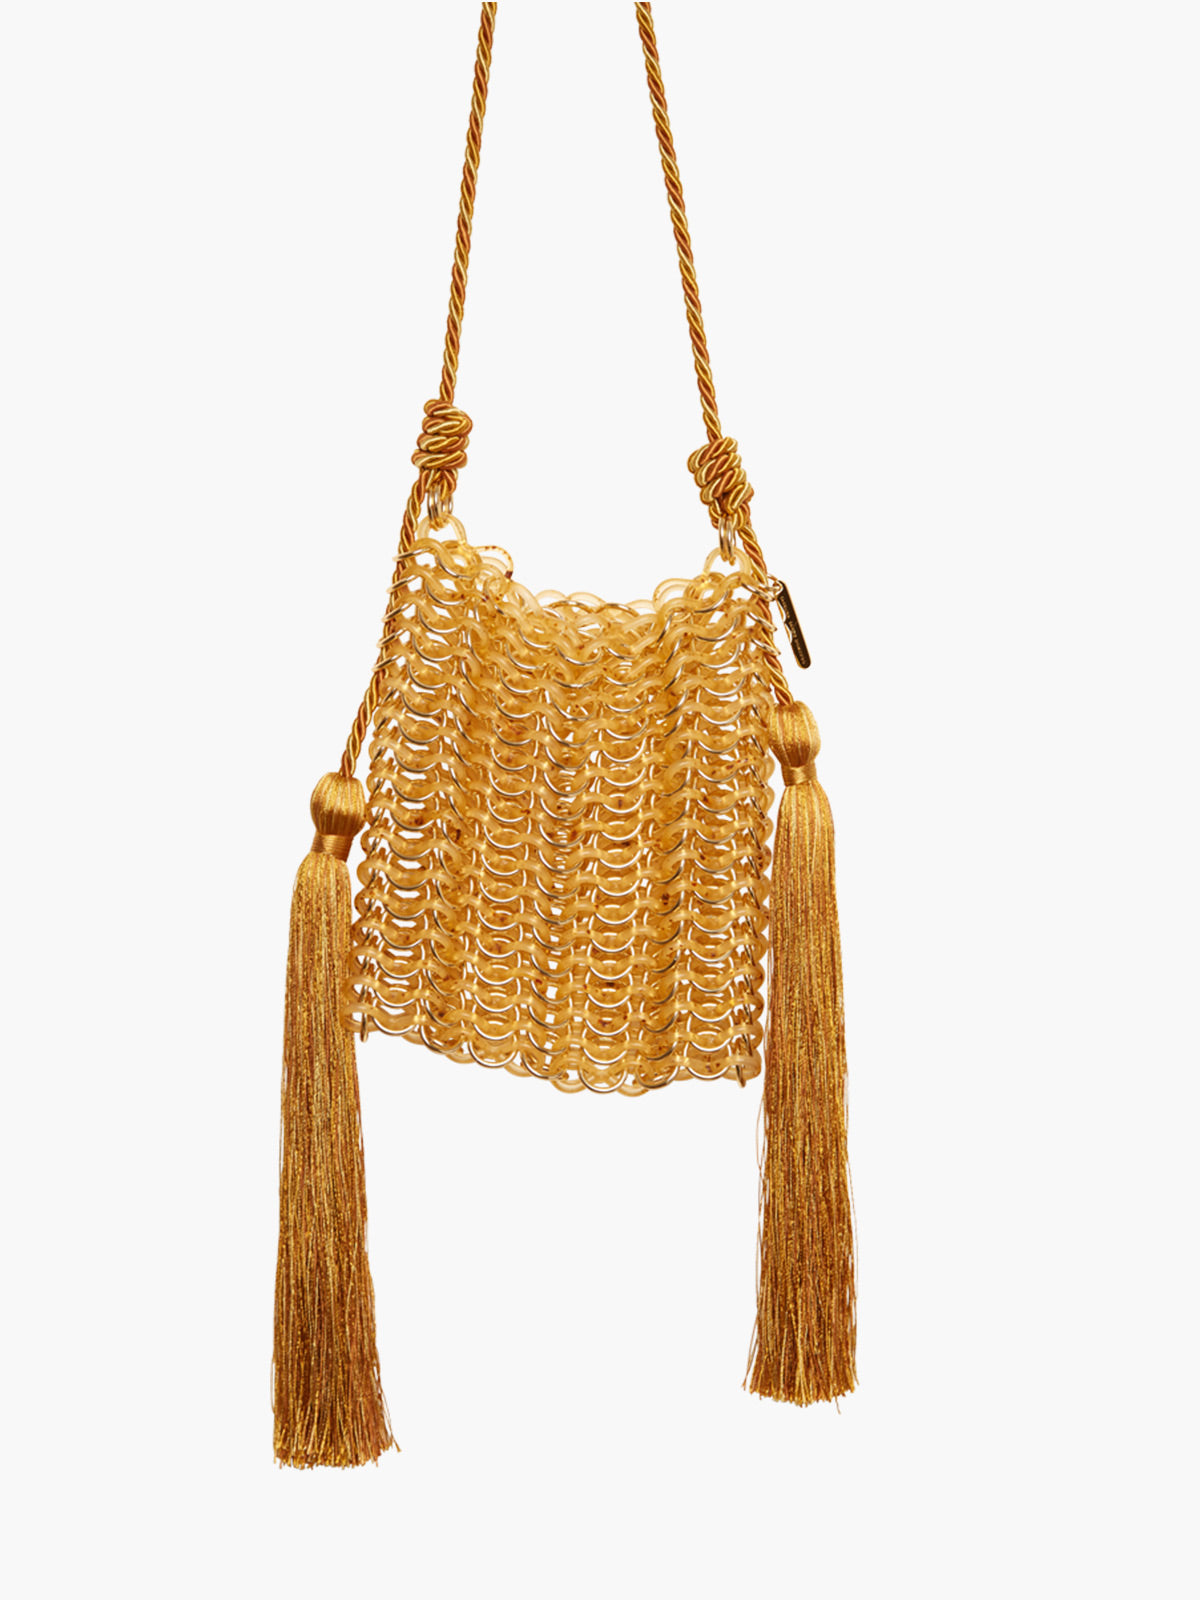 Luisella Shell Bag | Light Amber - Fashionkind